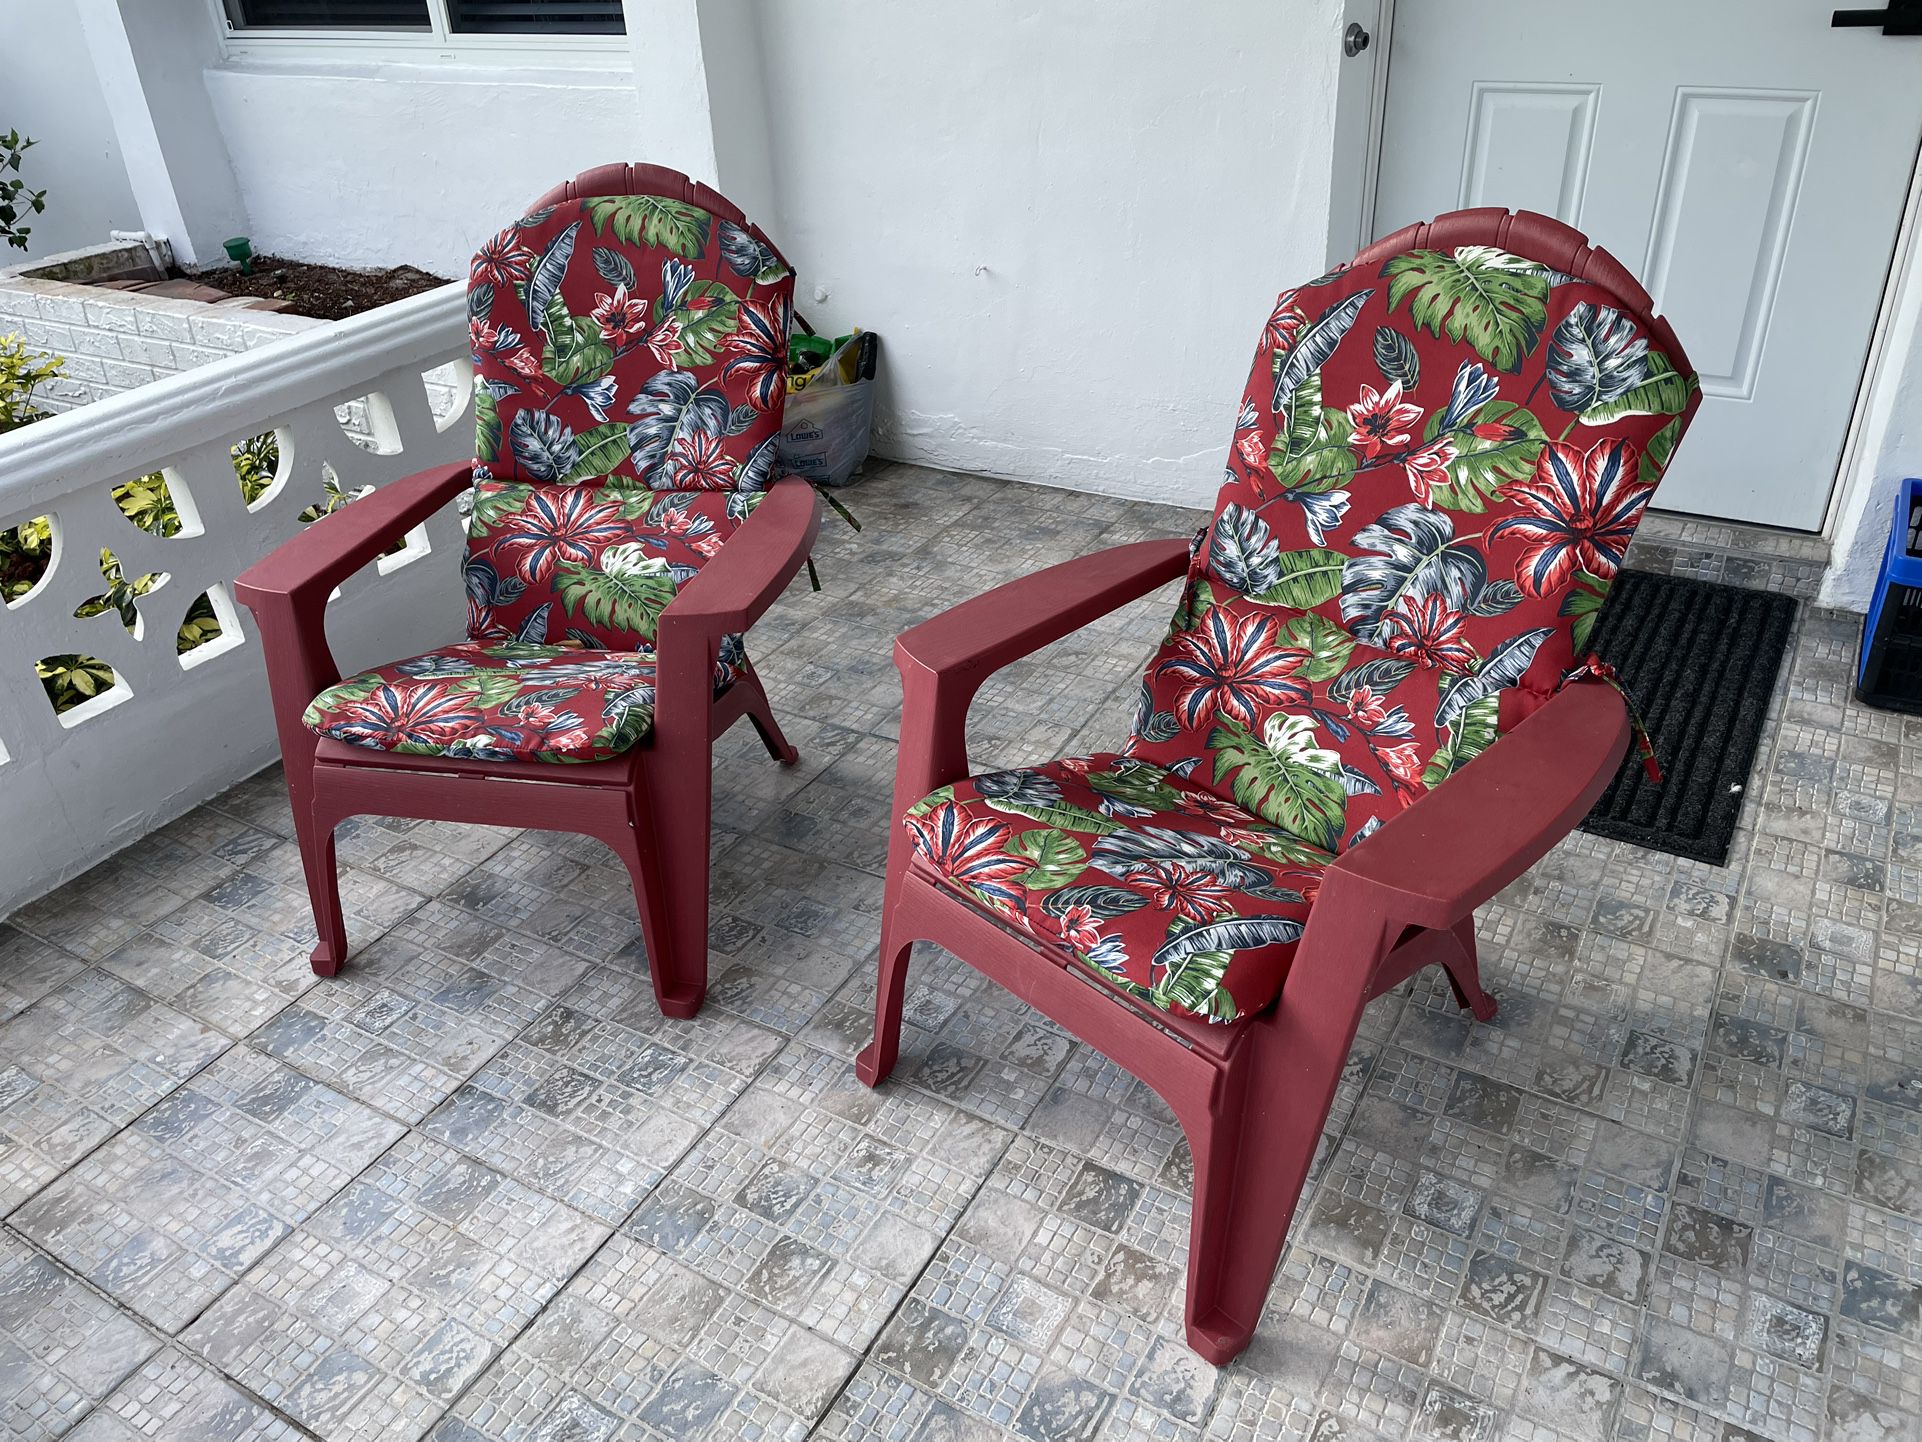 2 Adirondack Chairs 4 Cushions $80